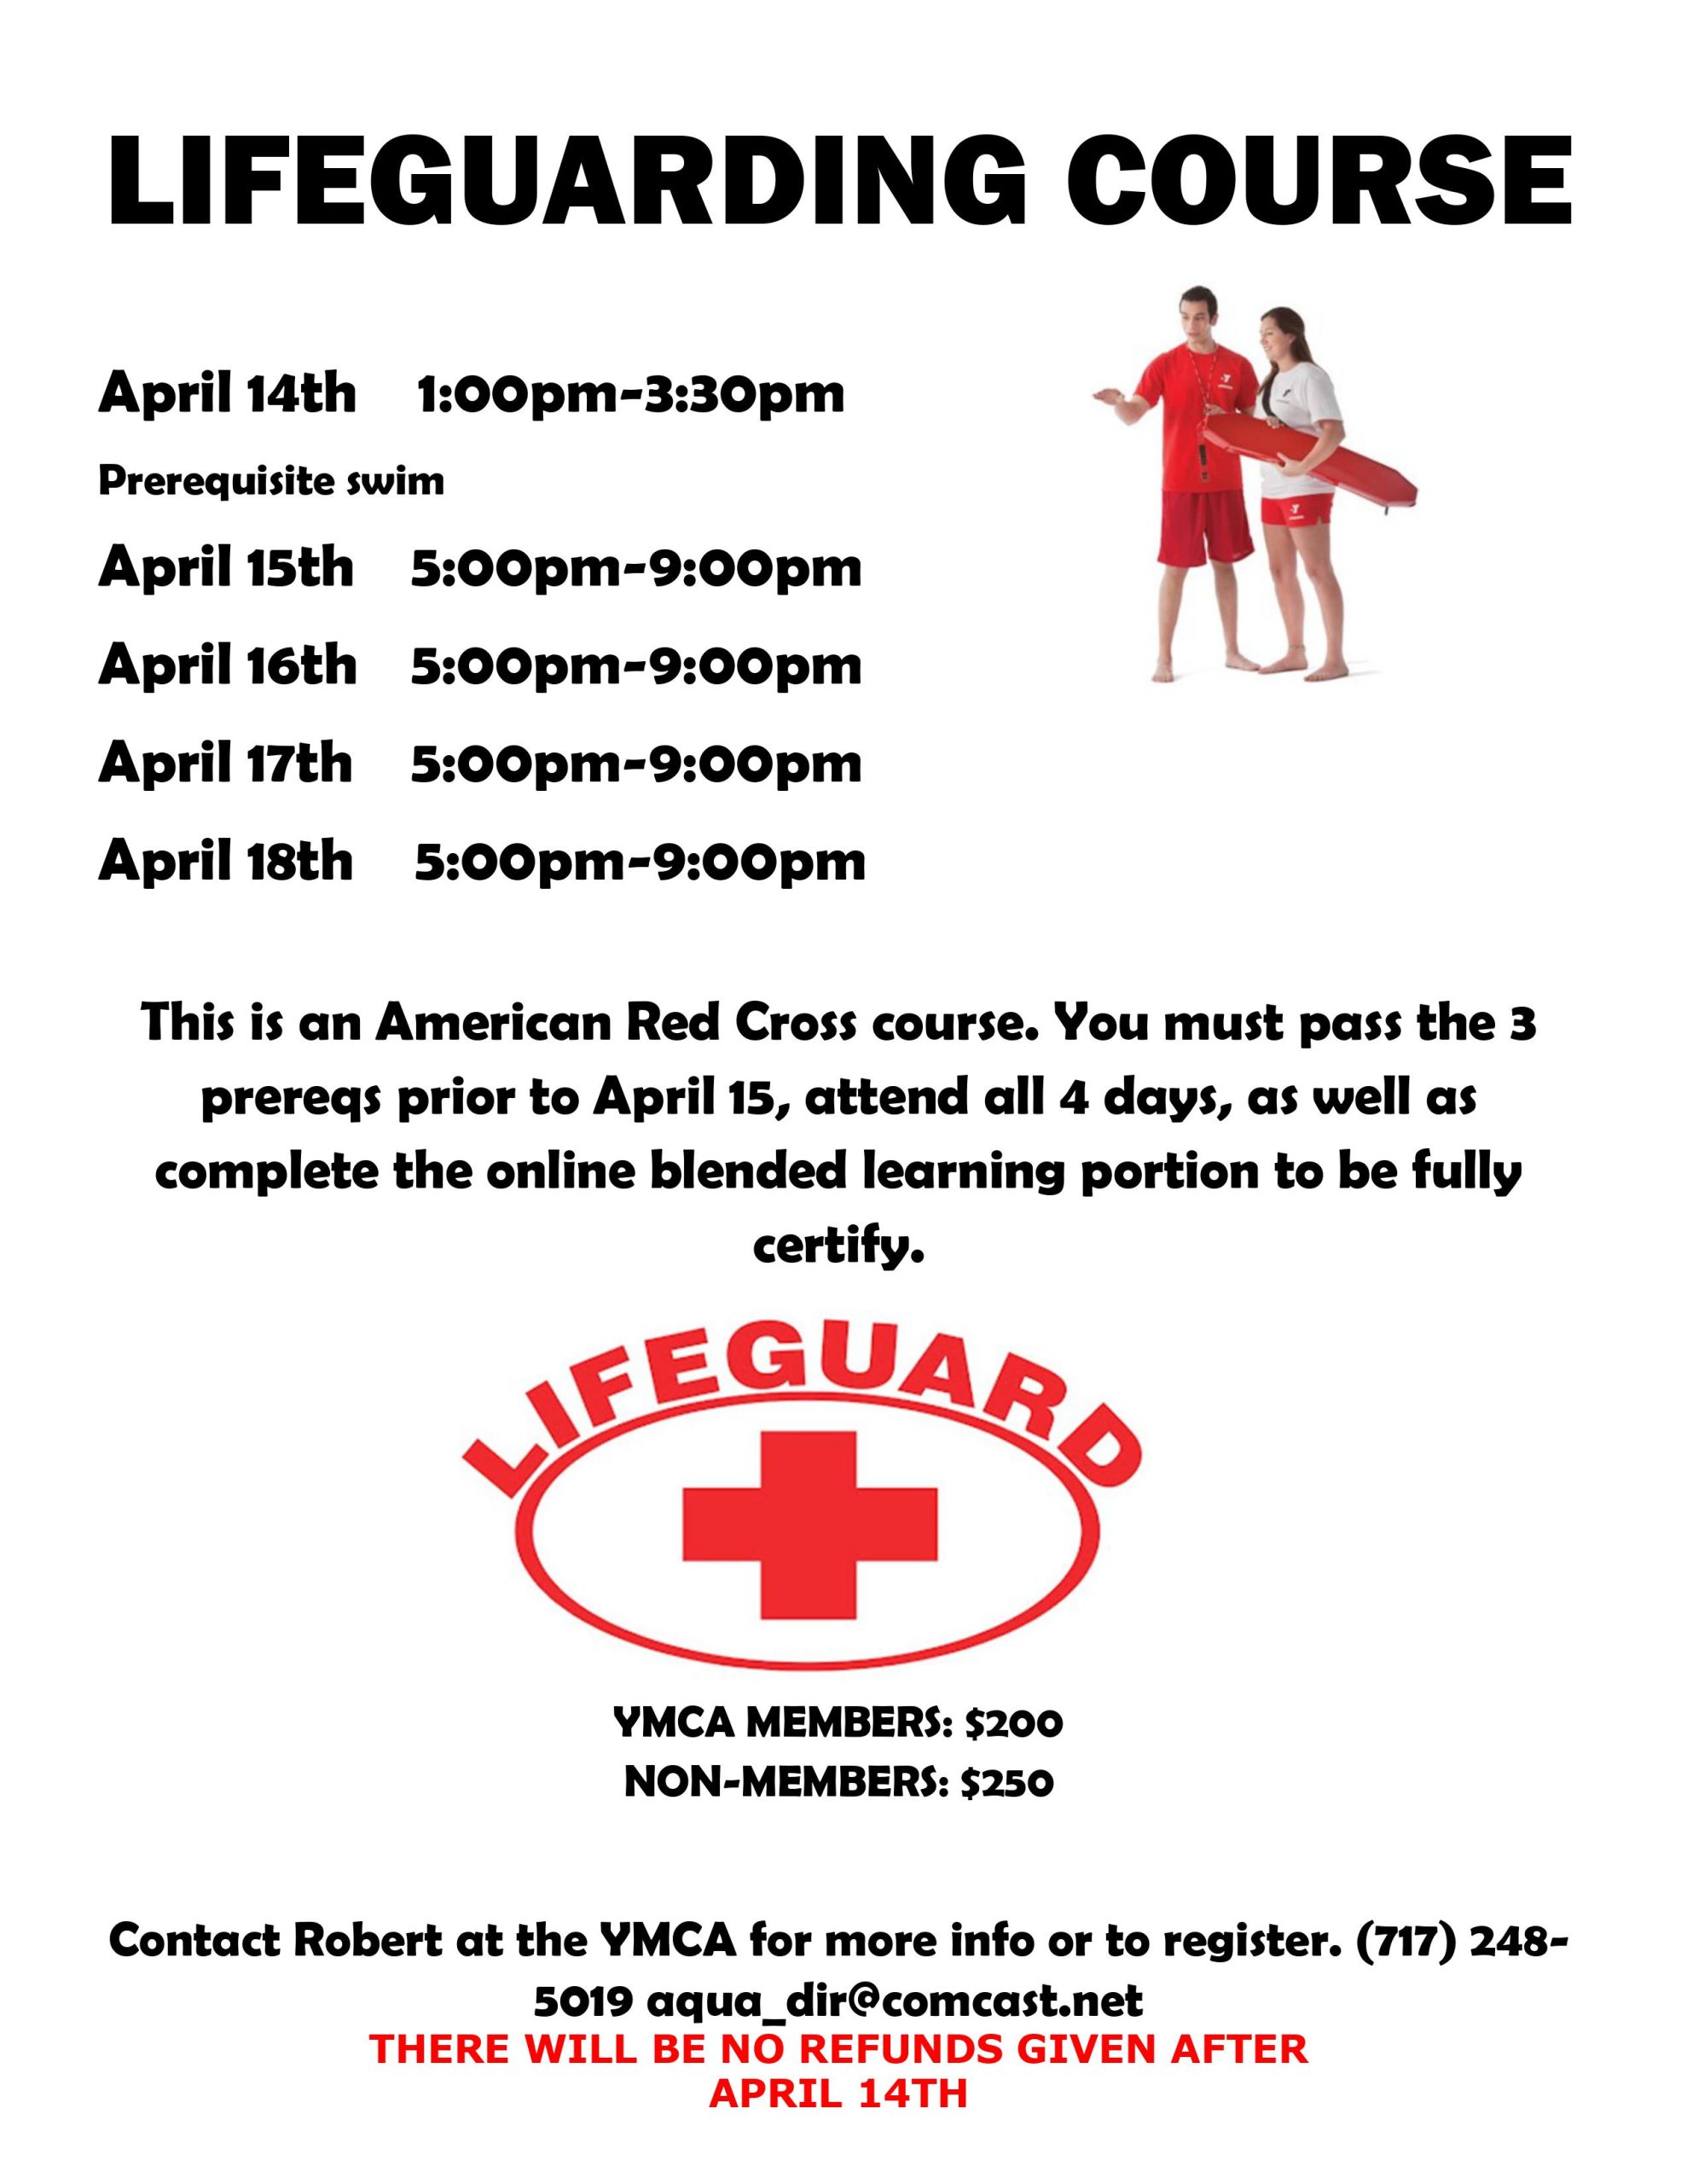 Lifeguarding Course Flyer April 14th